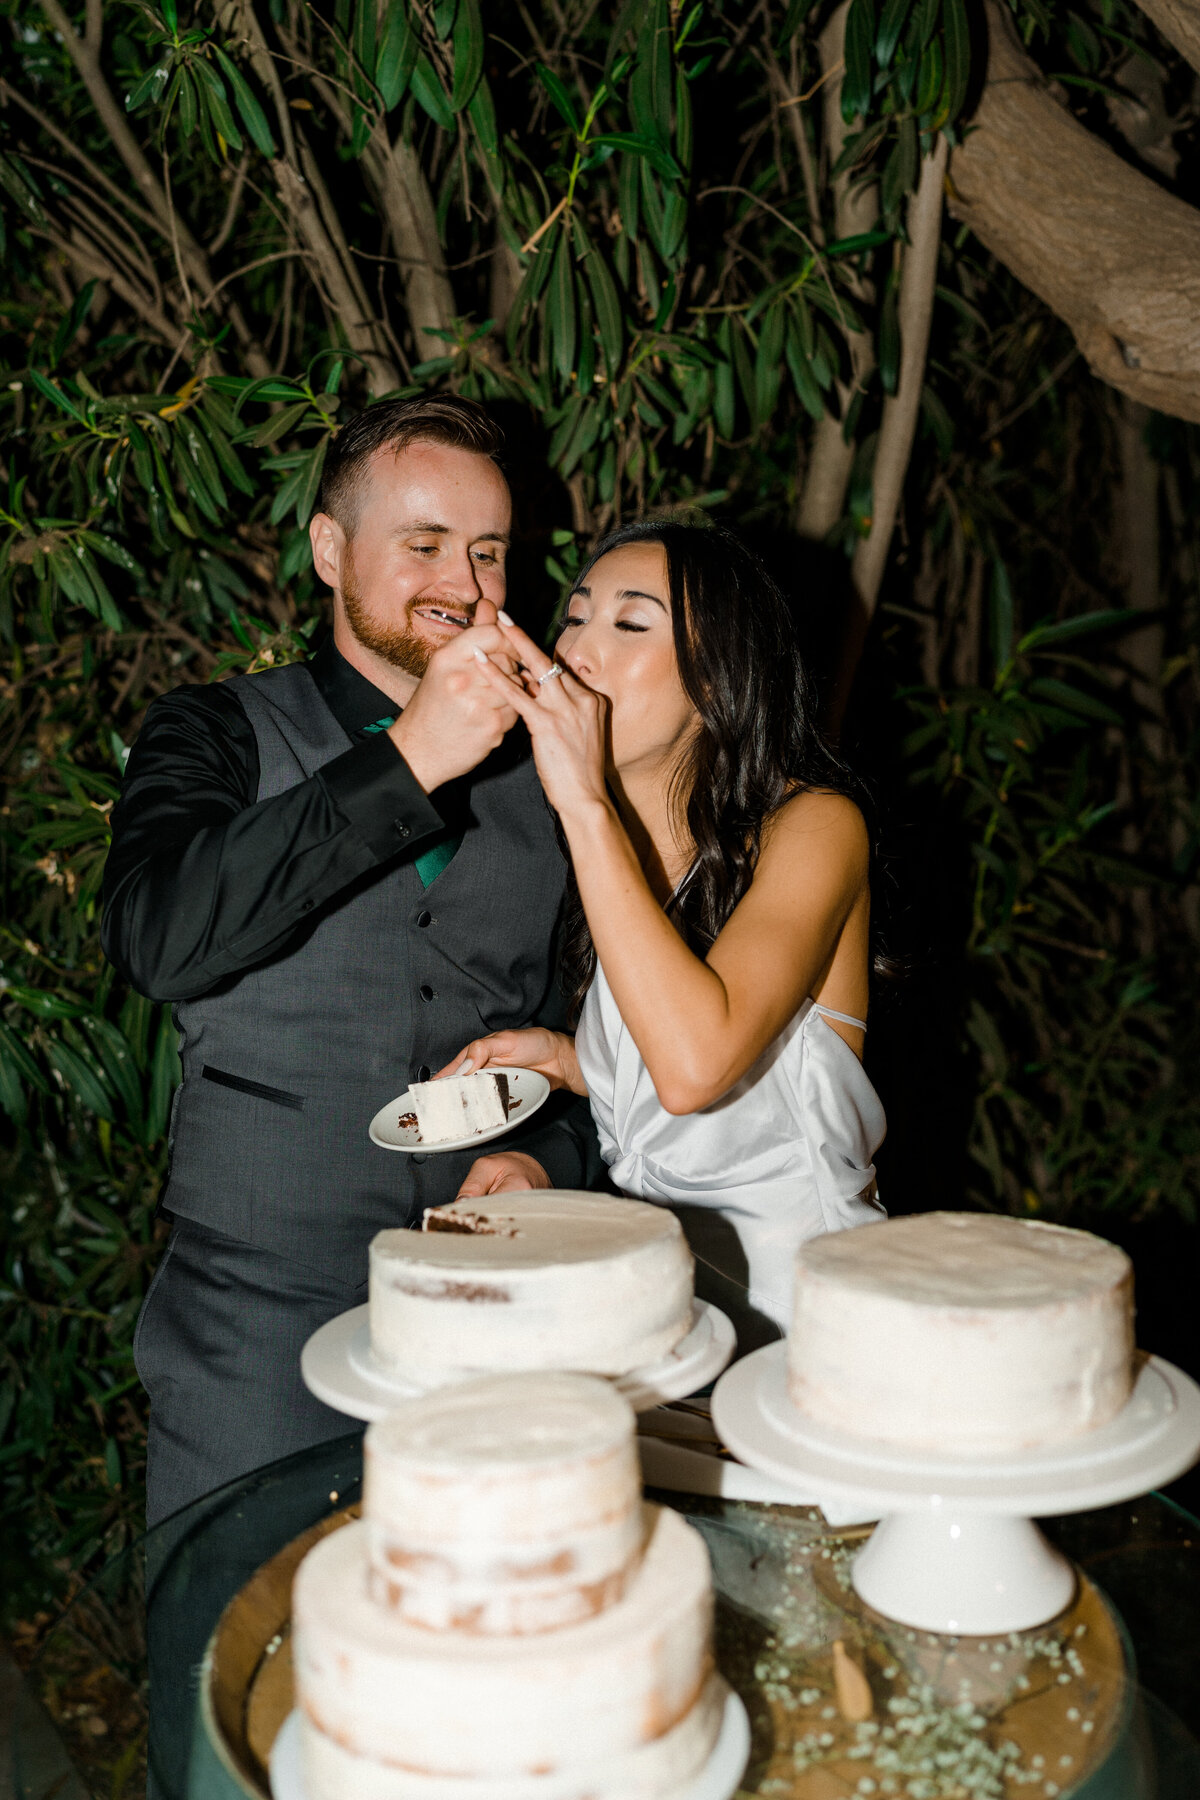 groom feeding bride a bite of cake